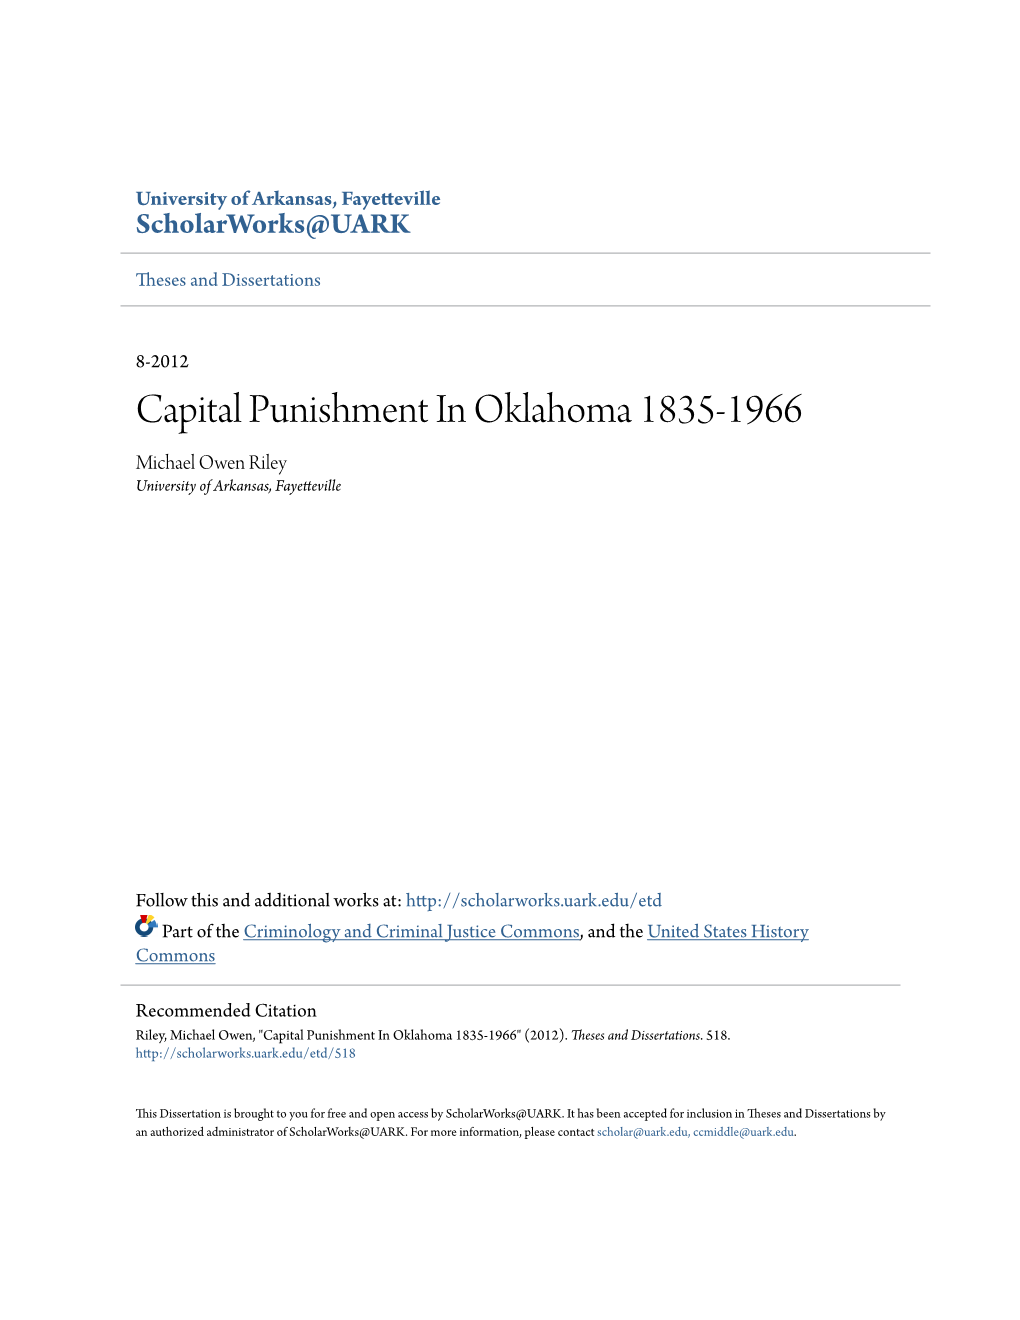 Capital Punishment in Oklahoma 1835-1966 Michael Owen Riley University of Arkansas, Fayetteville